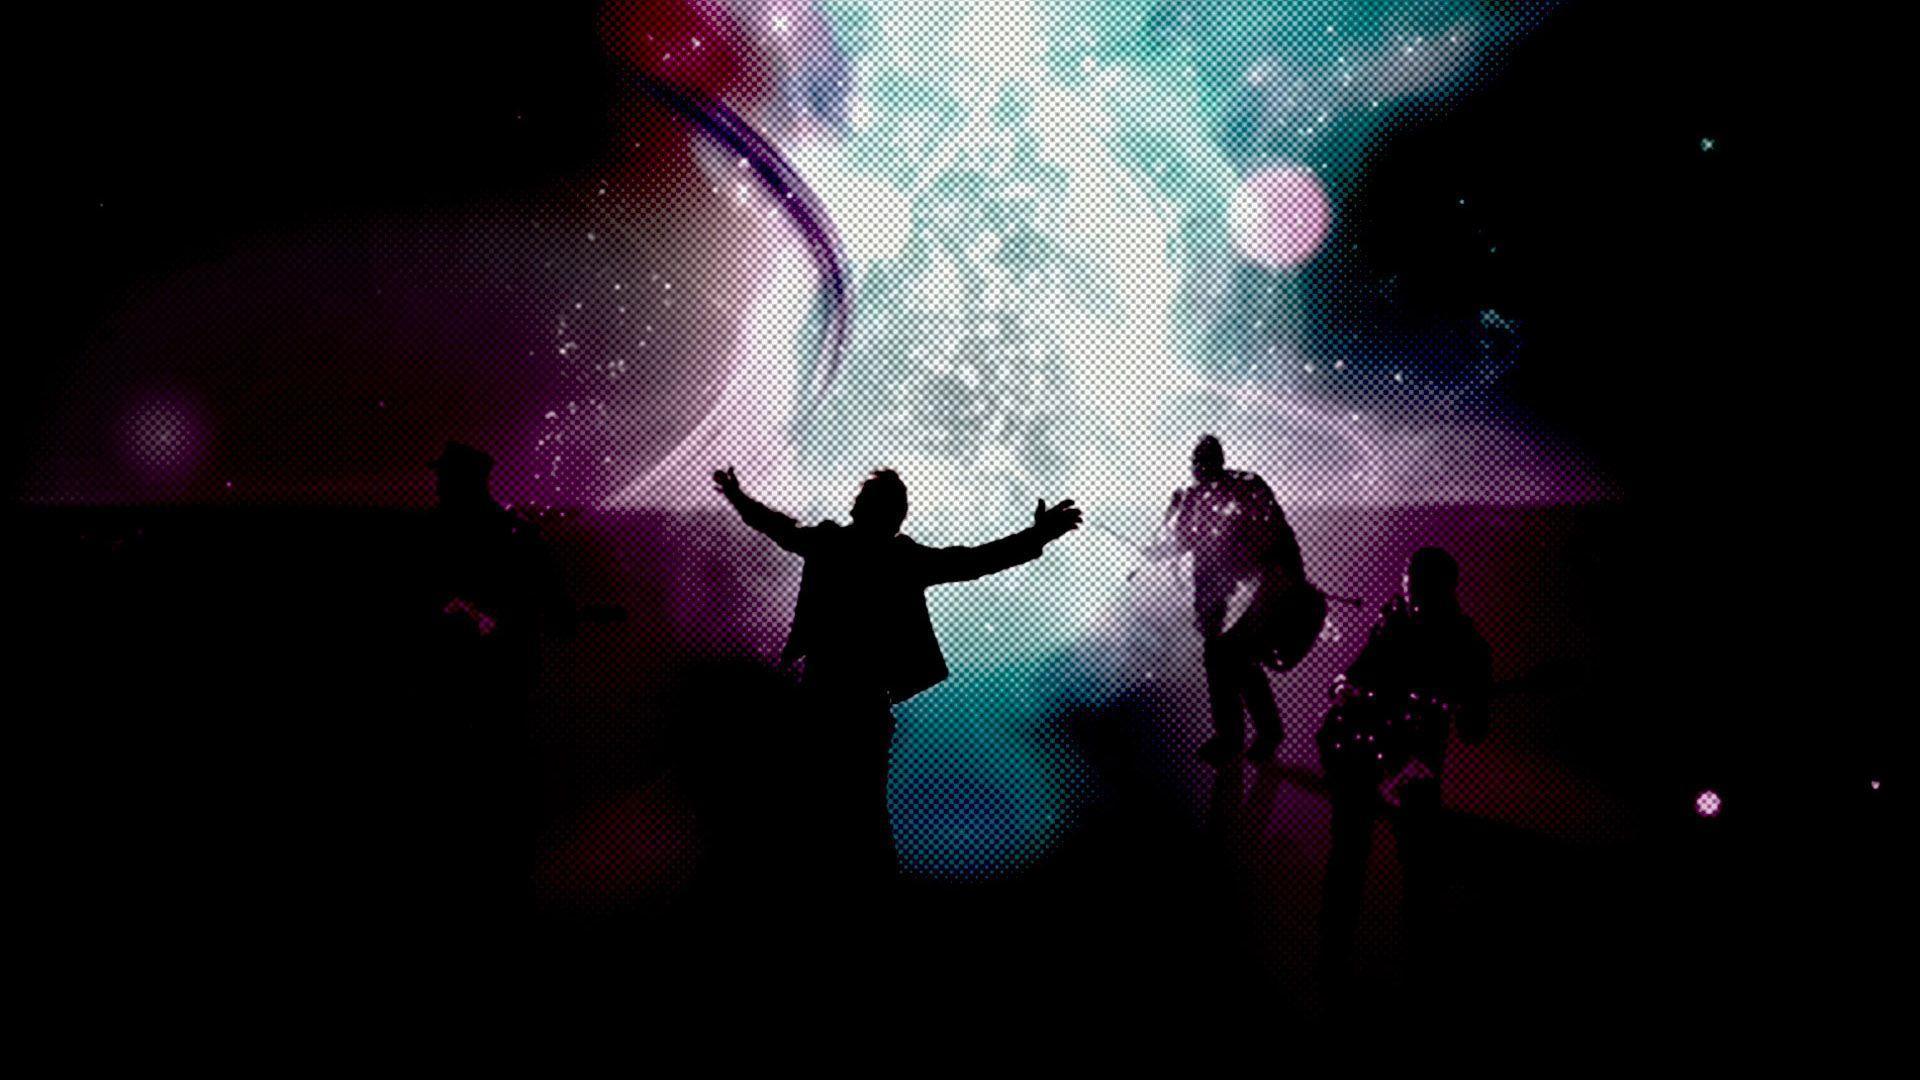 Coldplay Wallpaper HD